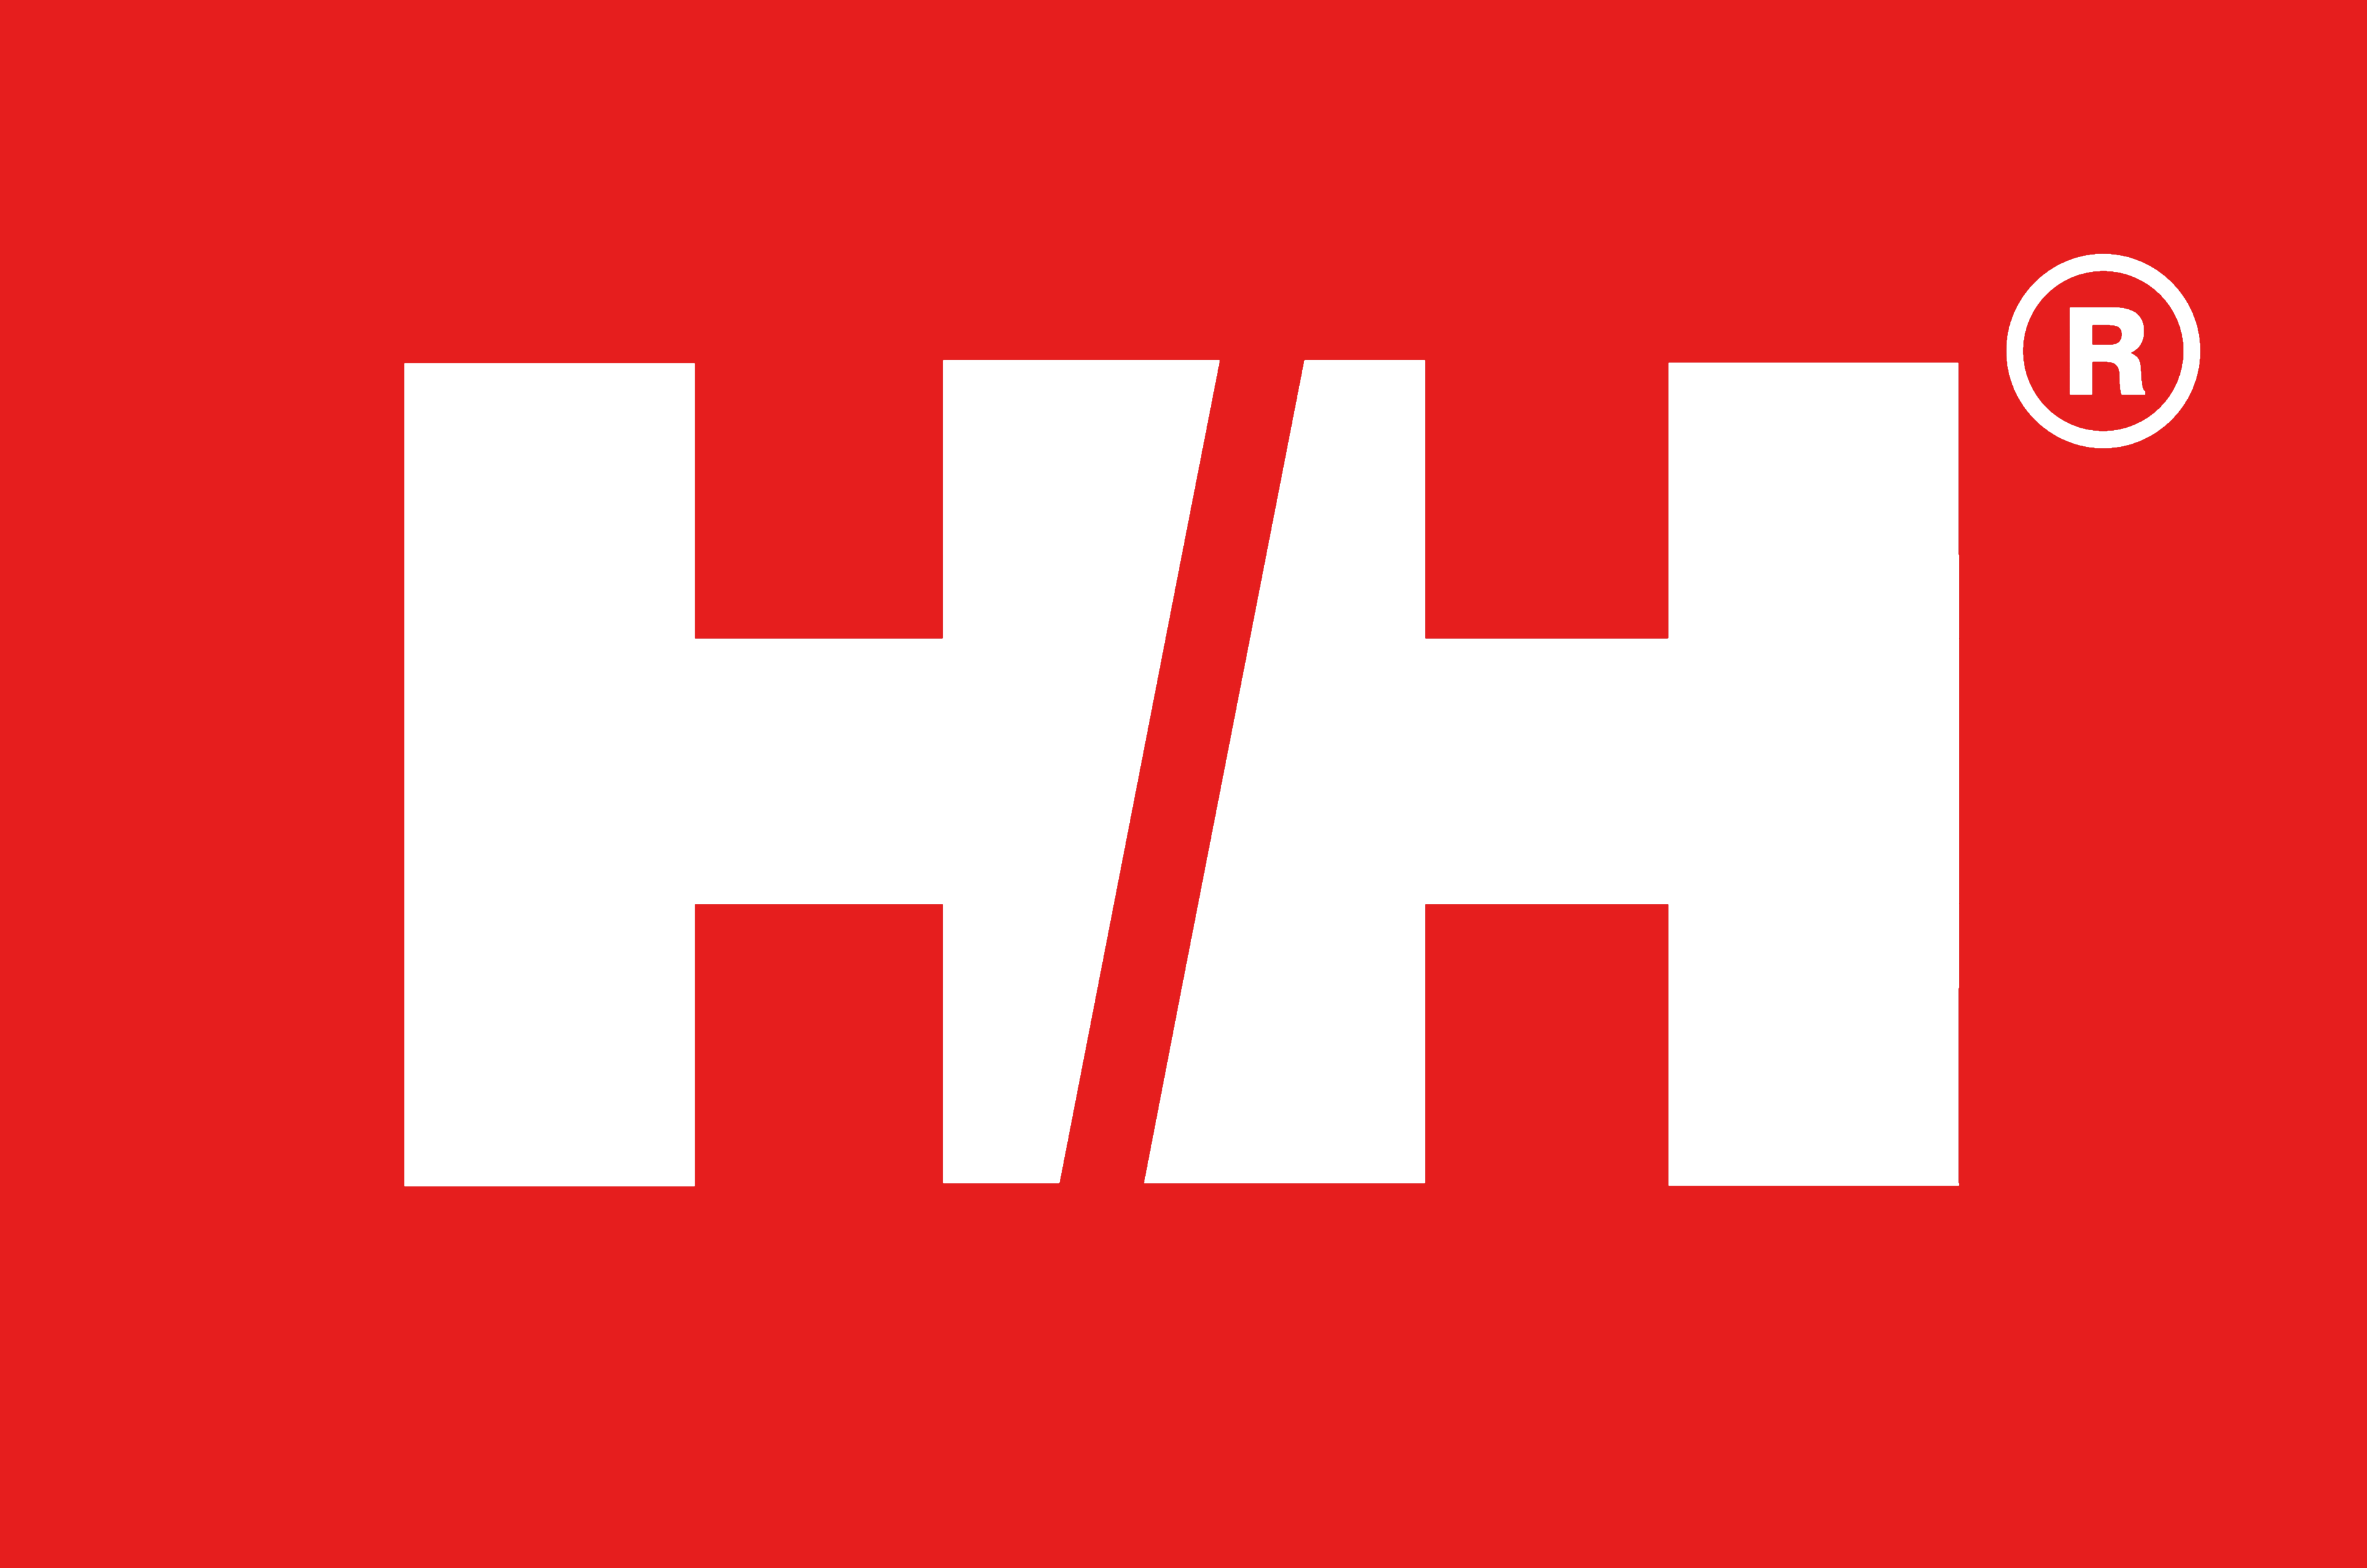 Логотип Helly Hansen (Хелли Хансен)